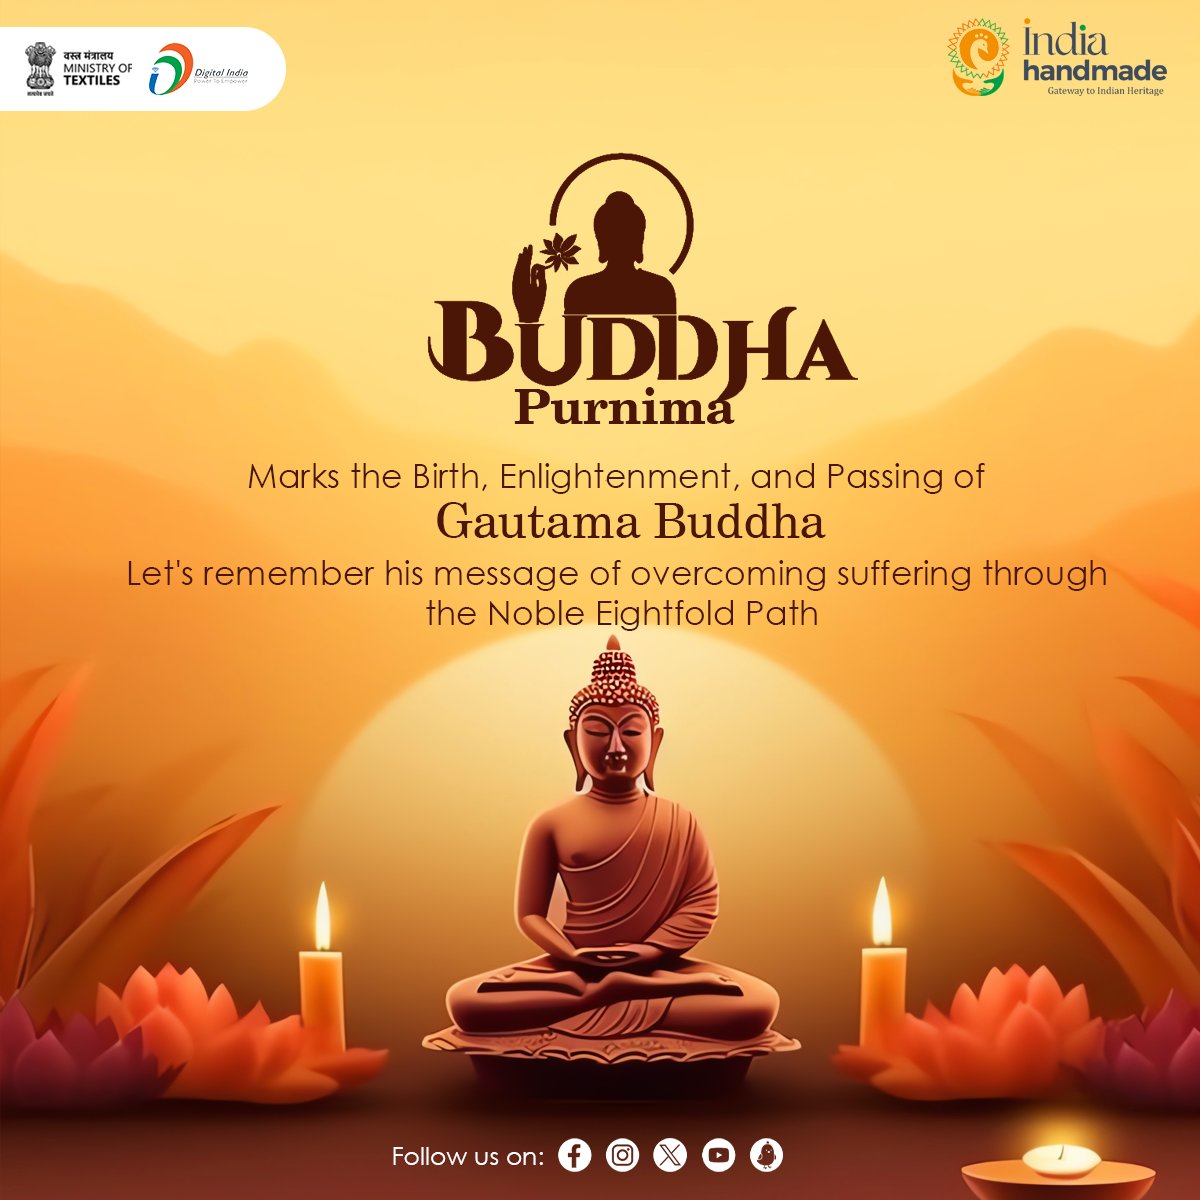 On #Buddha #Purnima, let us celebrate the birth of Siddhartha #gautambuddha, the enlightened one who showed us the path to peace, compassion & wisdom. May his teachings guide us towards inner light and happiness
#BuddhPurnima #BuddhistCelebration #buddhism
@goi_meity @TexMinIndia